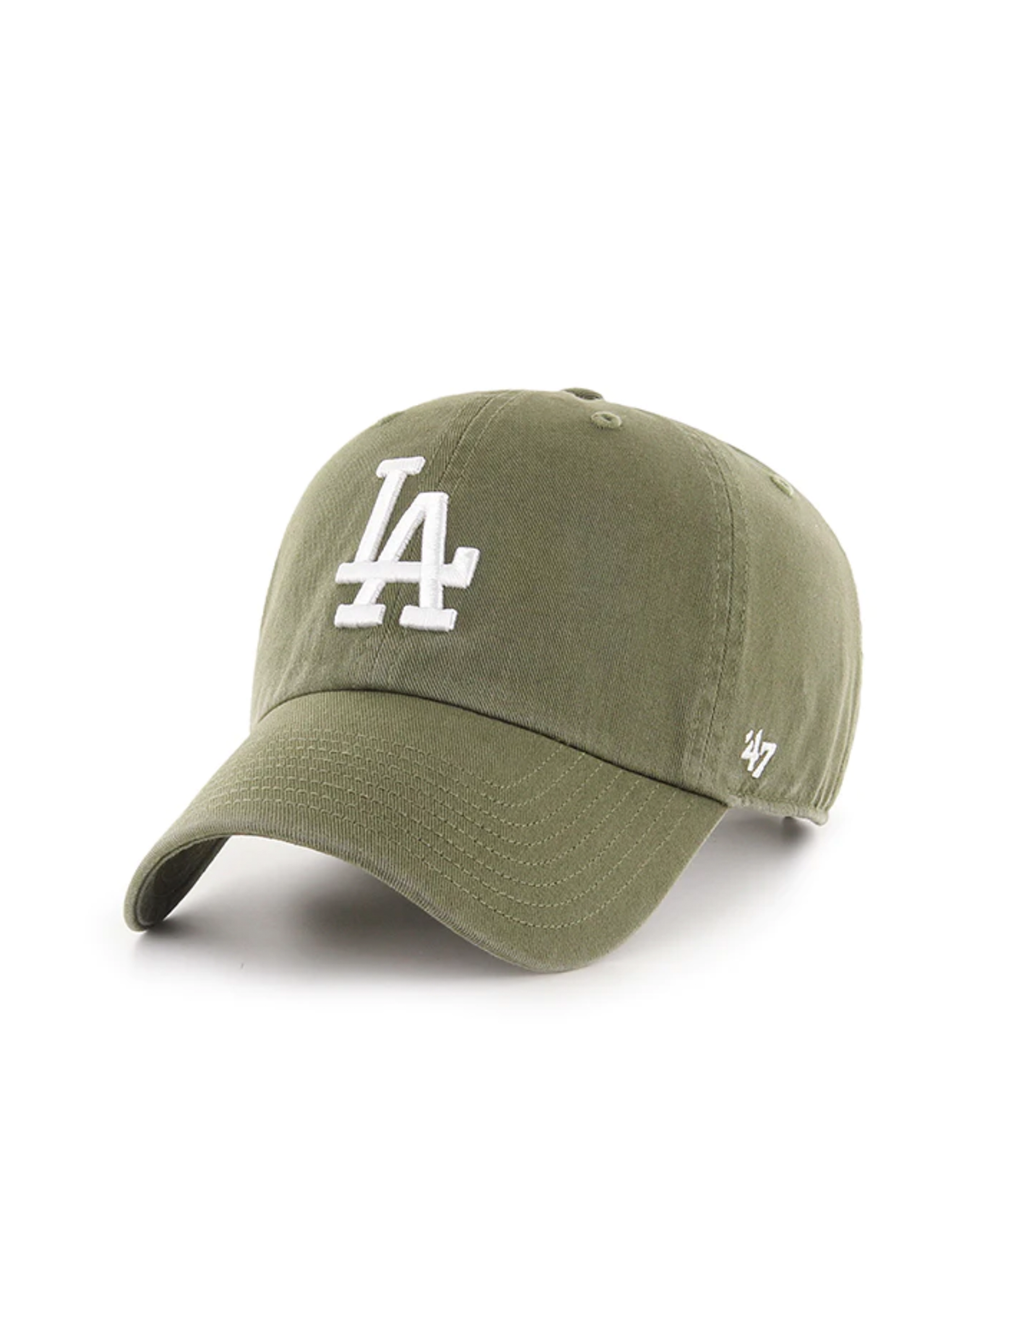 LA Dodgers Basic Ball Cap, Sandalwood/White